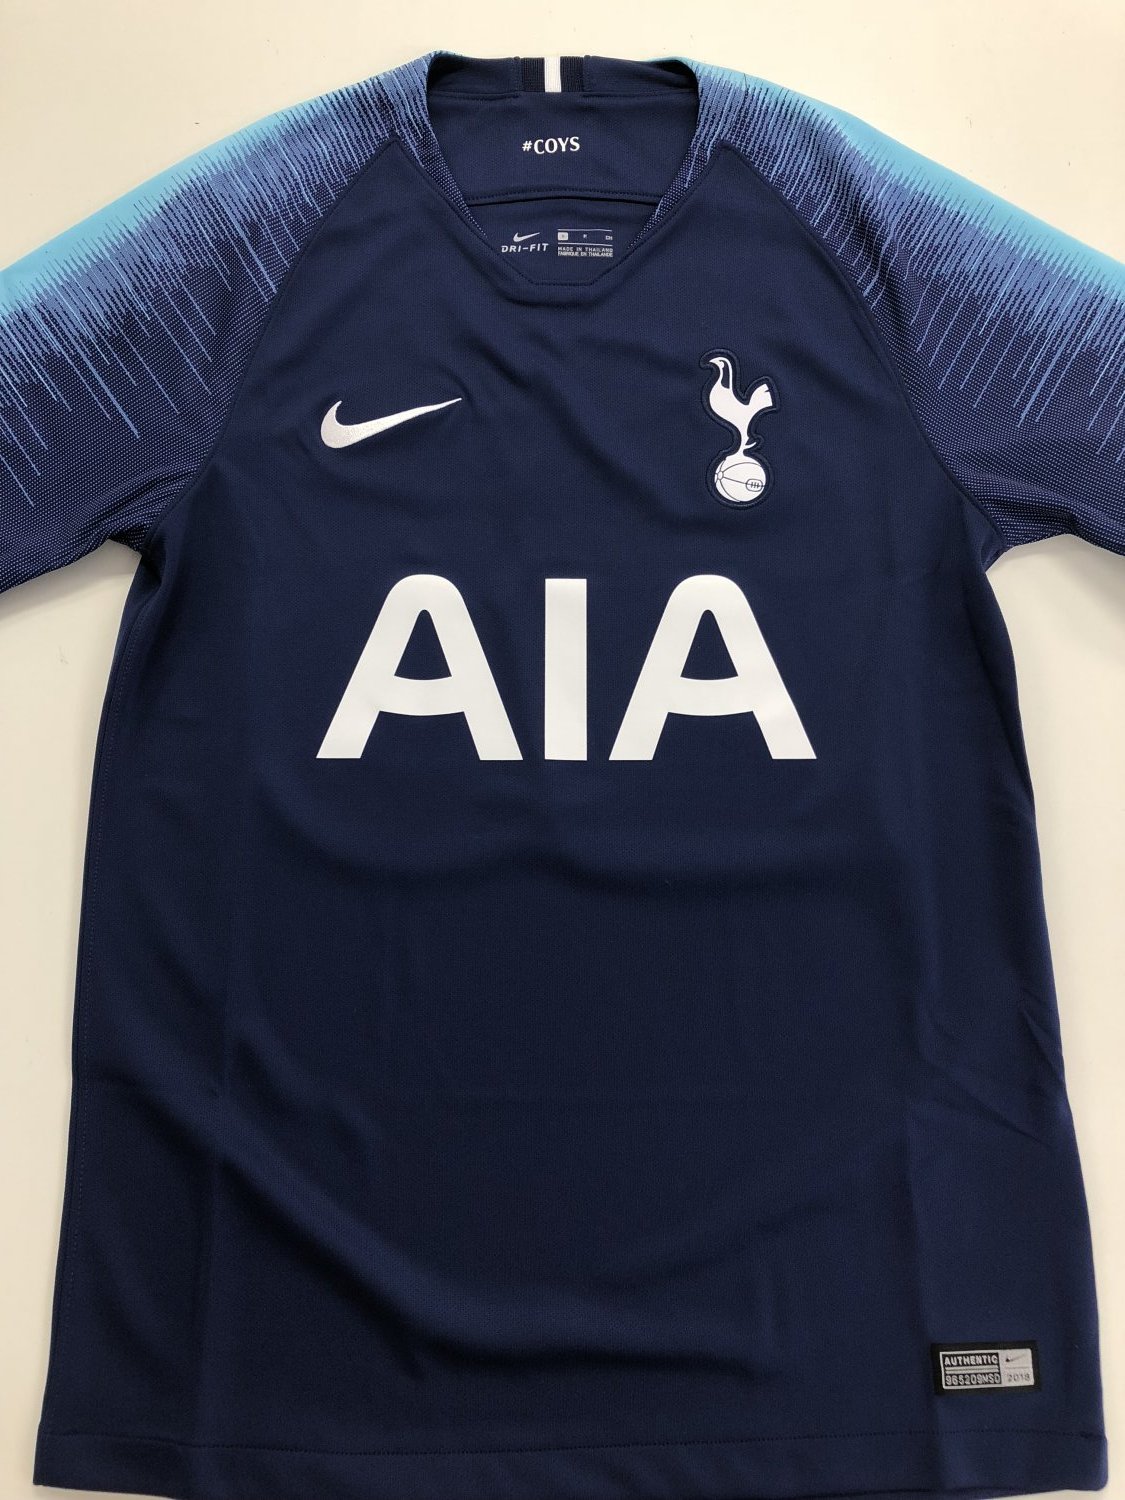 Hotspur Visitante Camiseta de Fútbol 2018 - 2019. Sponsored by AIA